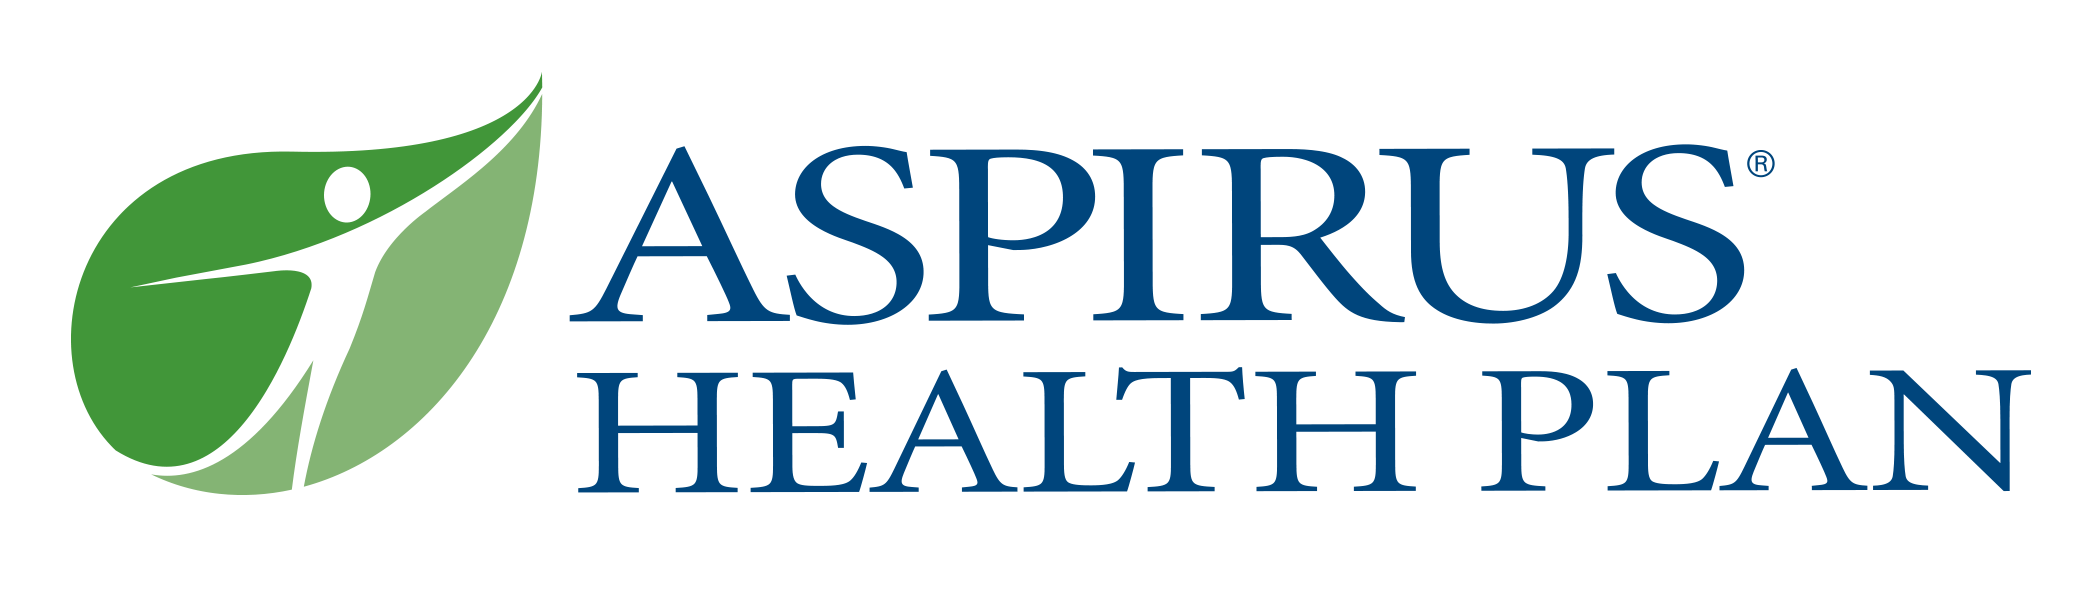 Aspirus Health Plan